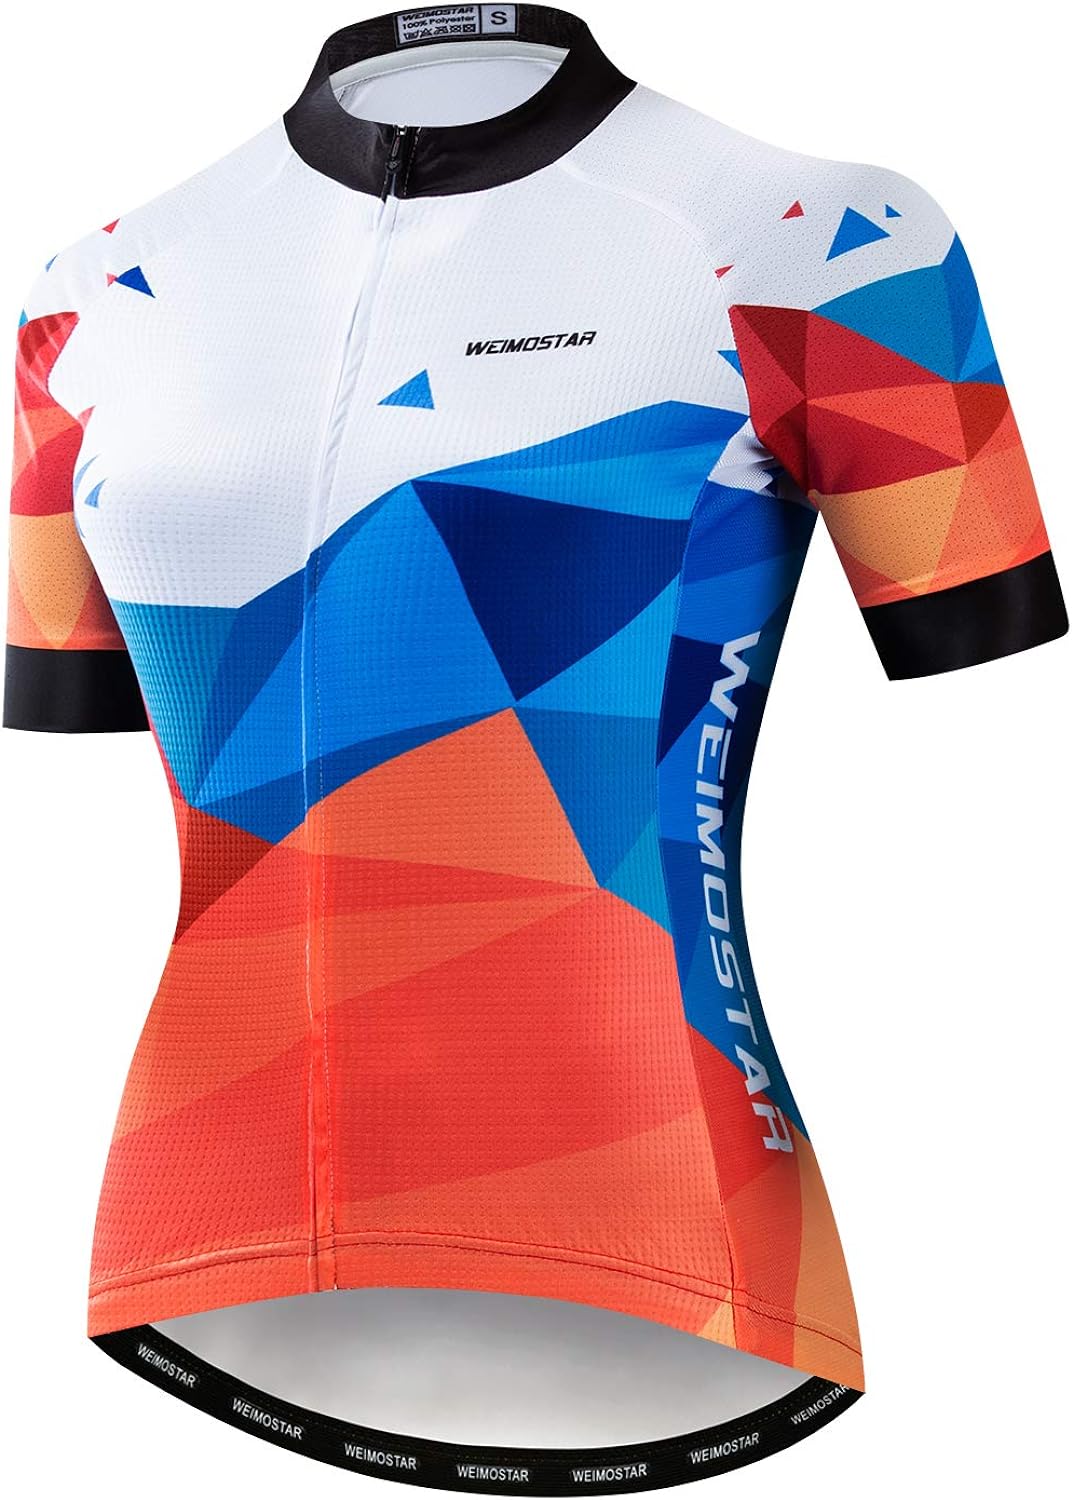 JPOJPO Cycling Jersey Women Pro Team Bike Clothing Wear Shirts Short Sleeve Bicycle Tops